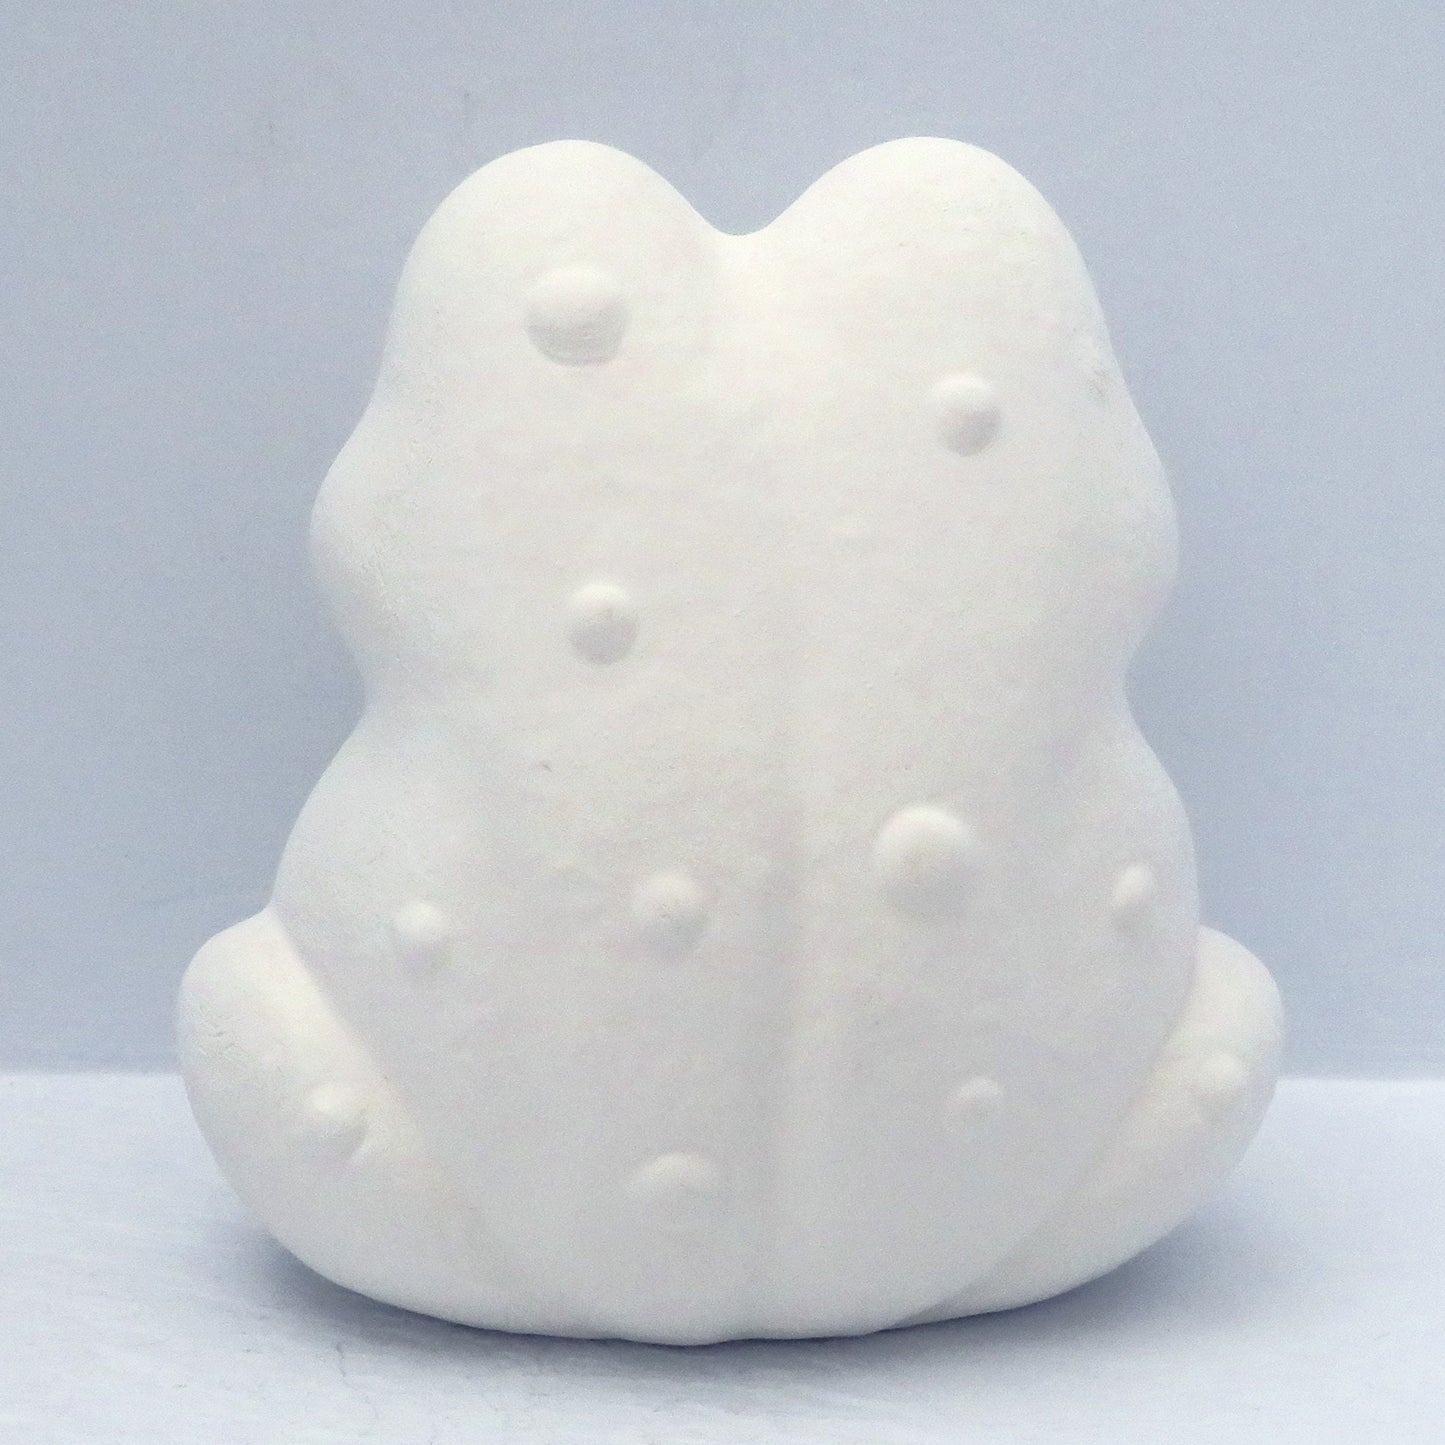 Handmade Unpainted Ceramic Bisque Frog Sponge Holder / Ready To Paint Frog Figurine / Frog Kitchen Decor /  Paintable Ceramics